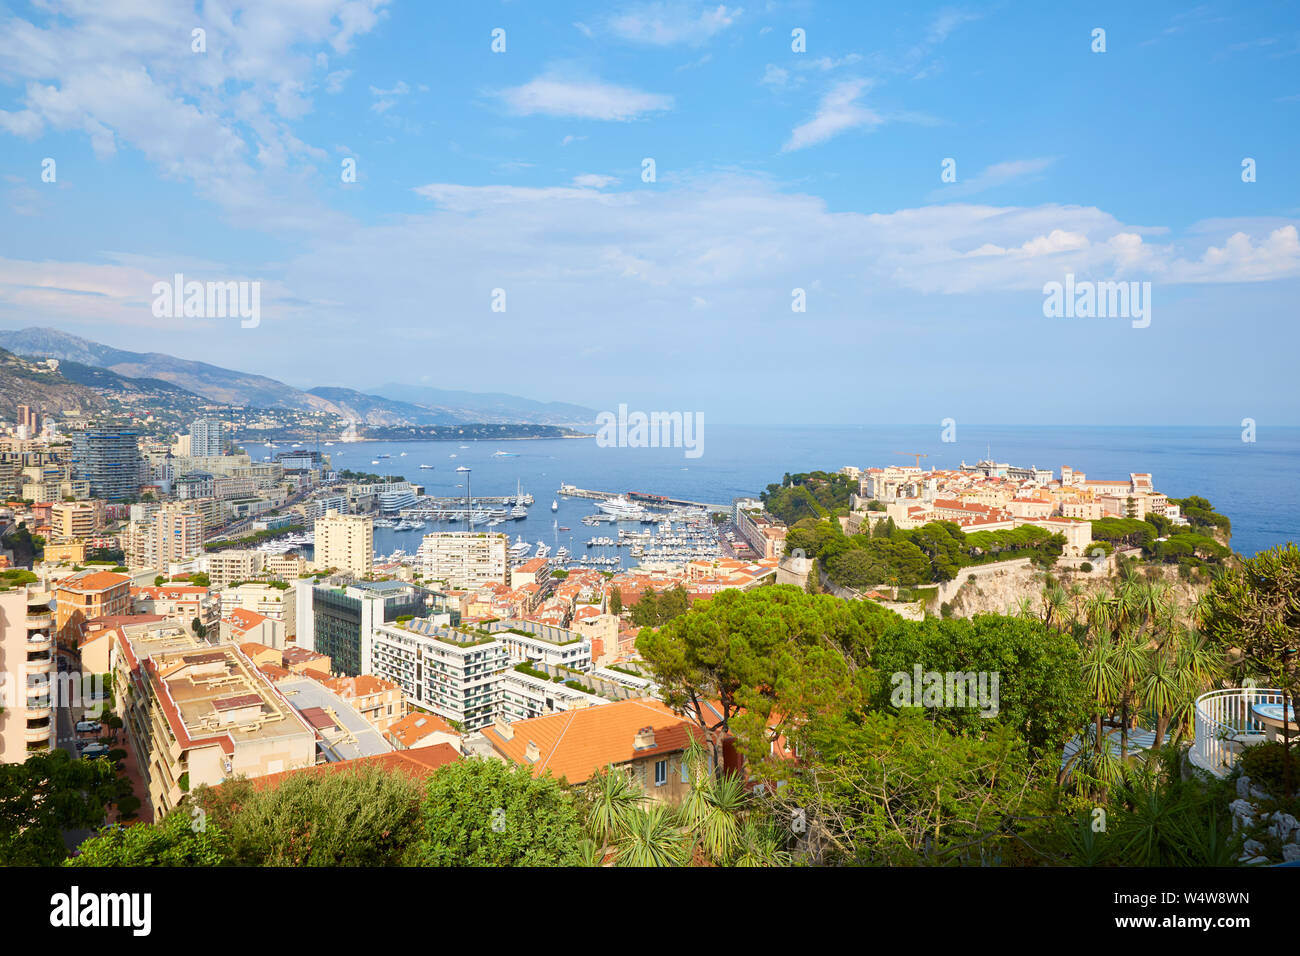 MONTE CARLO, MONACO - AUGUST 20, 2016: Monte Carlo city high angle sea view and coast with meditterranean vegetation in Monte Carlo, Monaco. Stock Photo